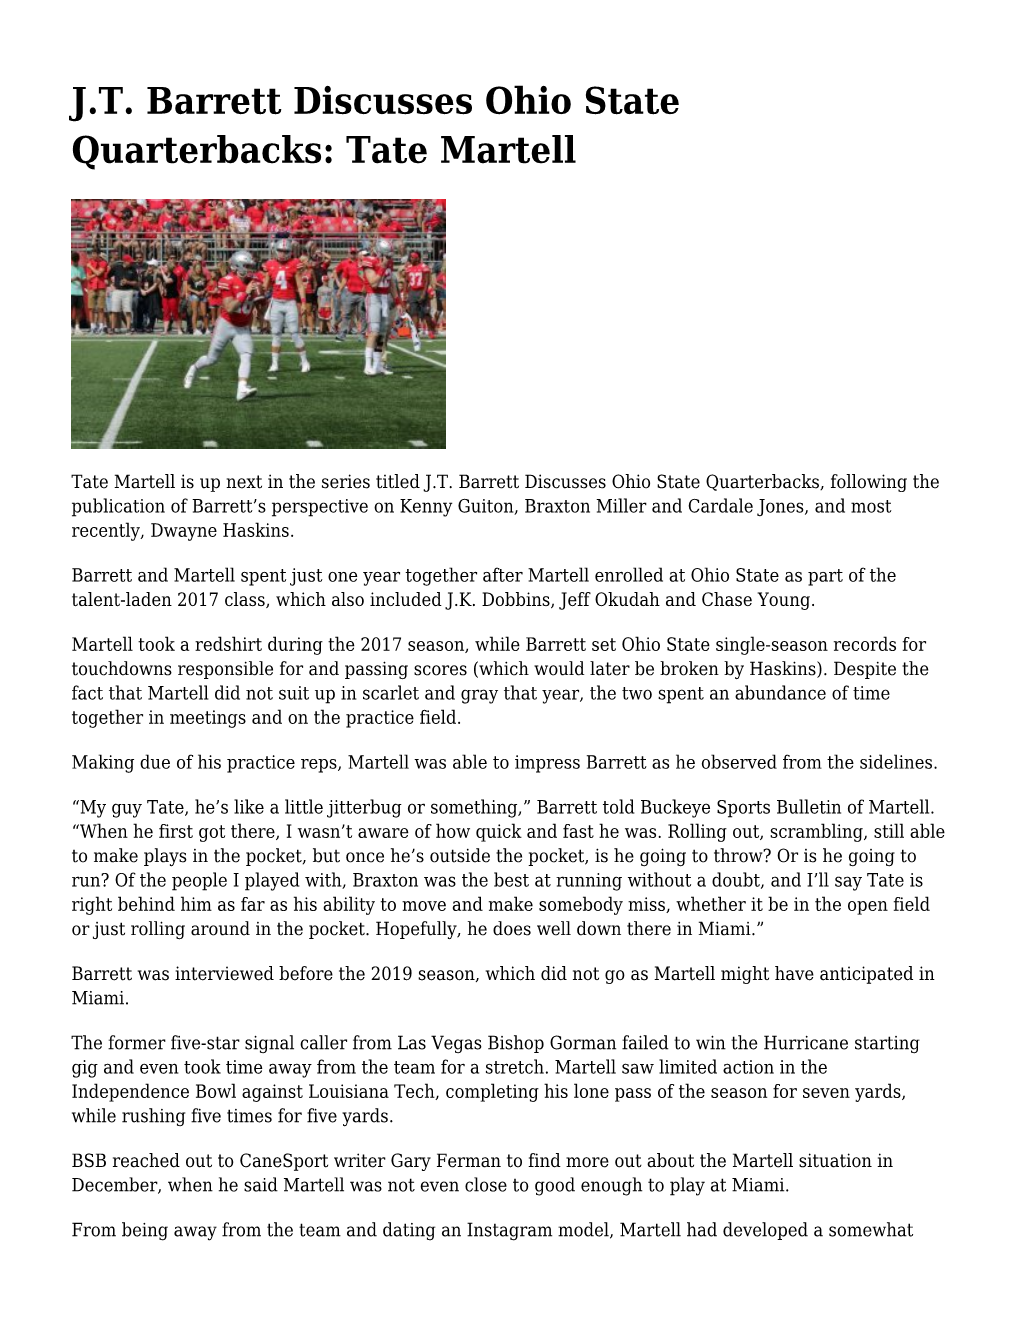 J.T. Barrett Discusses Ohio State Quarterbacks: Tate Martell